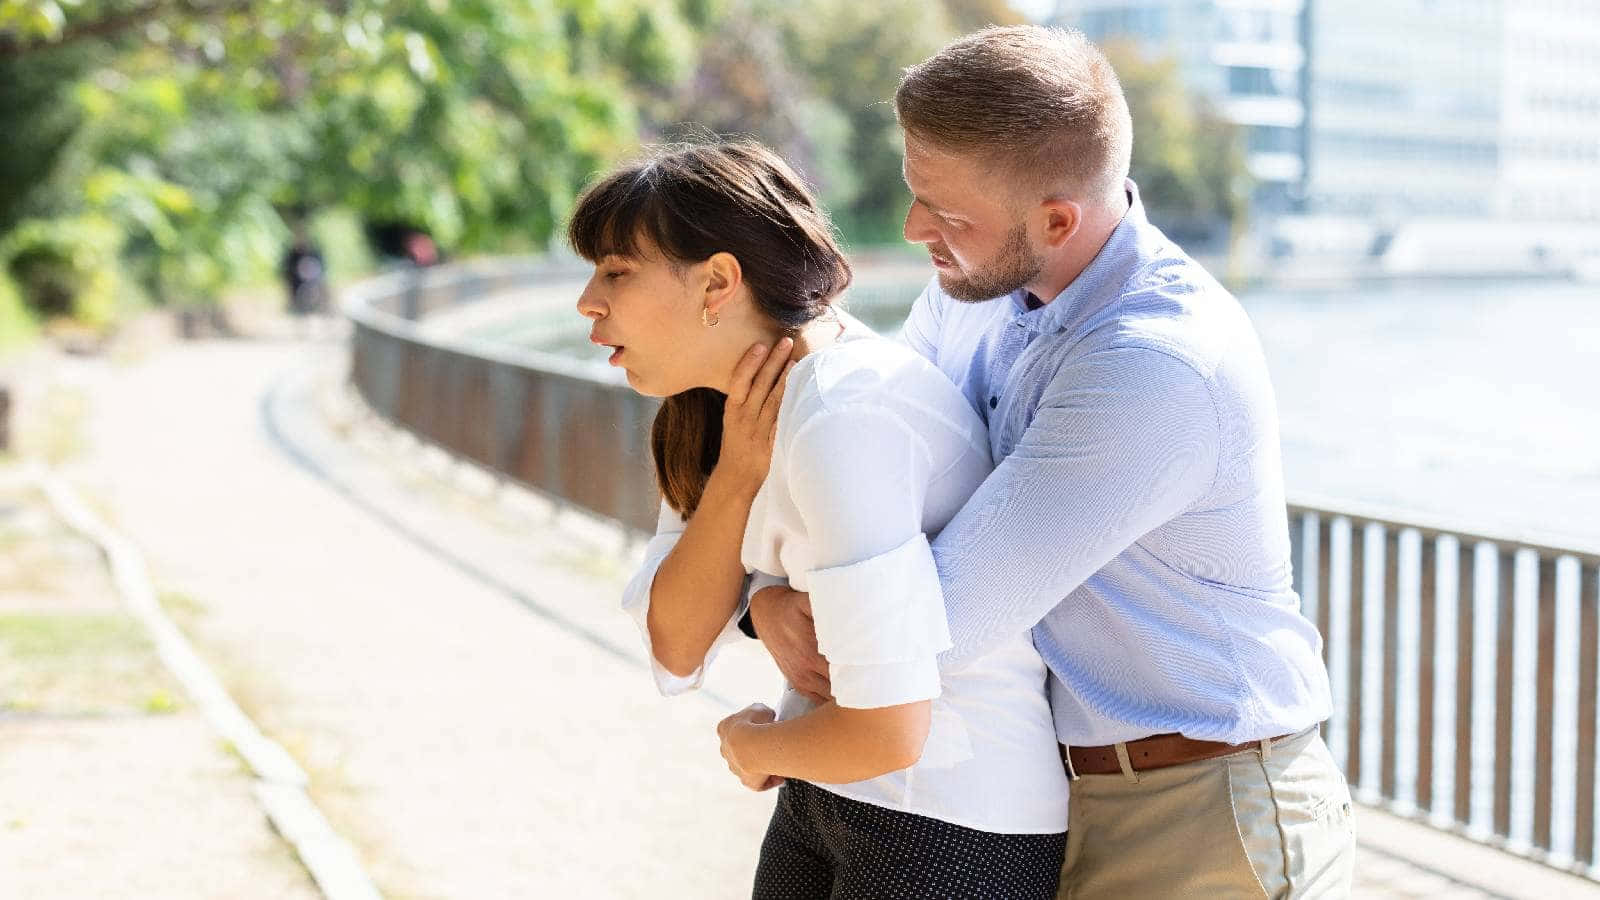 Man Saving A Choking Woman Background